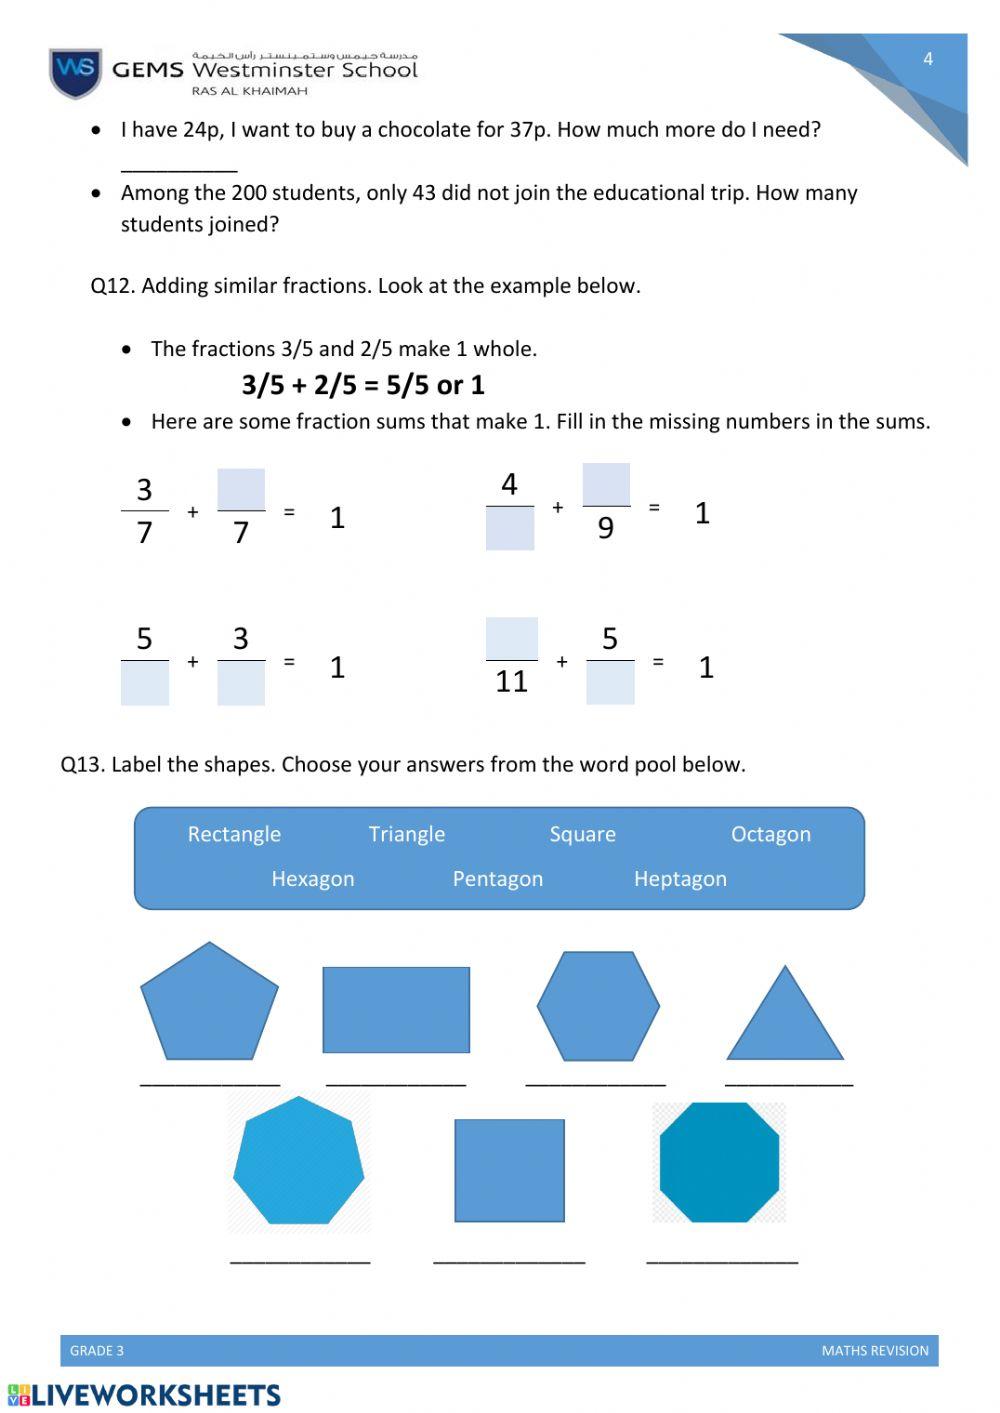 Maths Assessment Practice 2